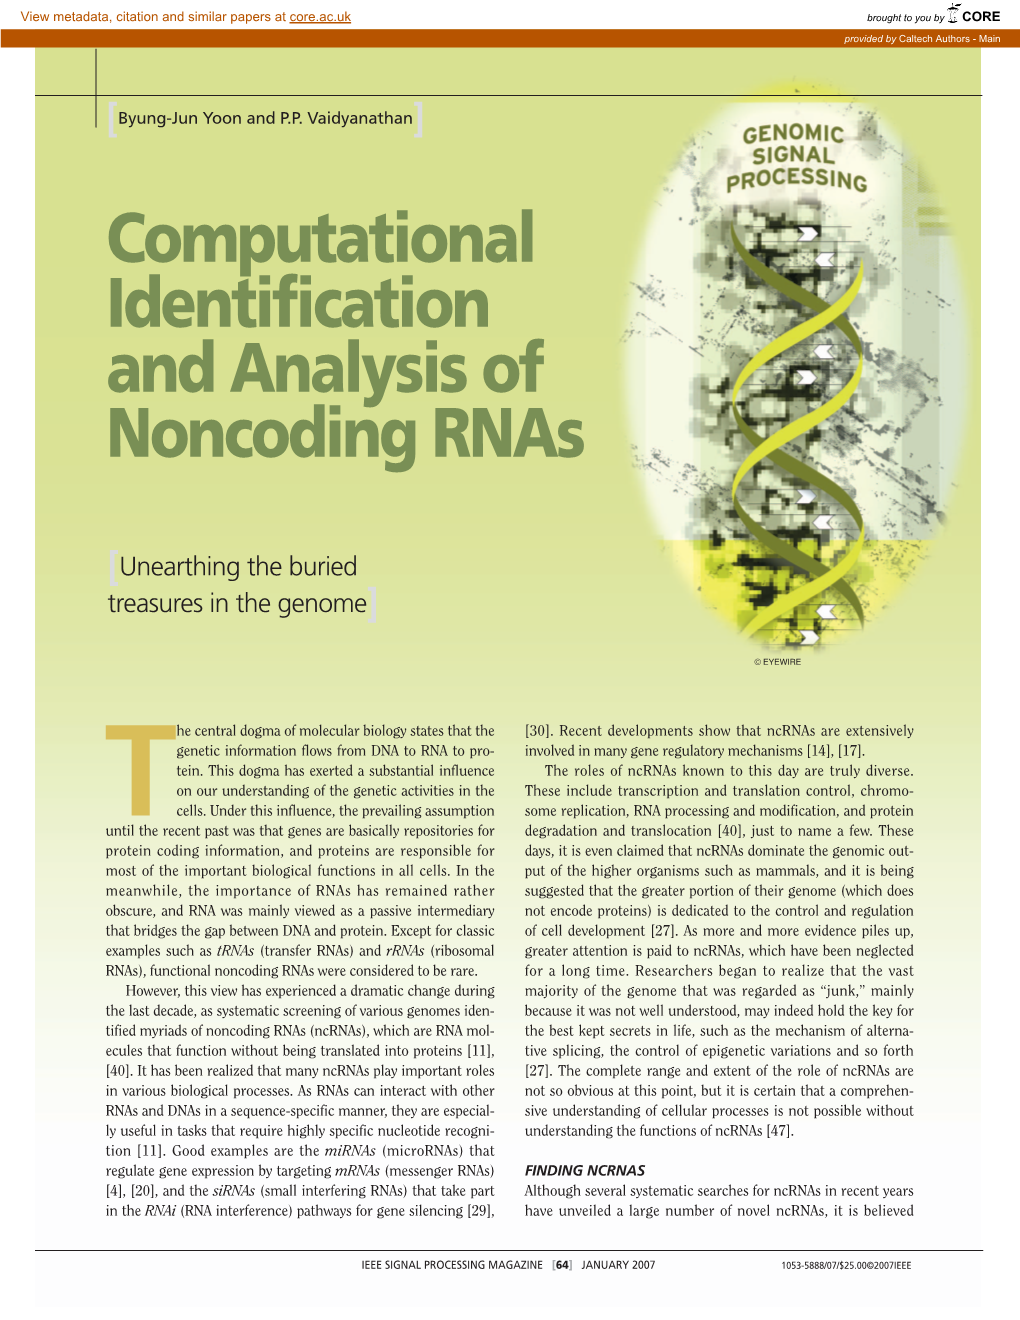 Computational Identification and Analysis of Noncoding Rnas